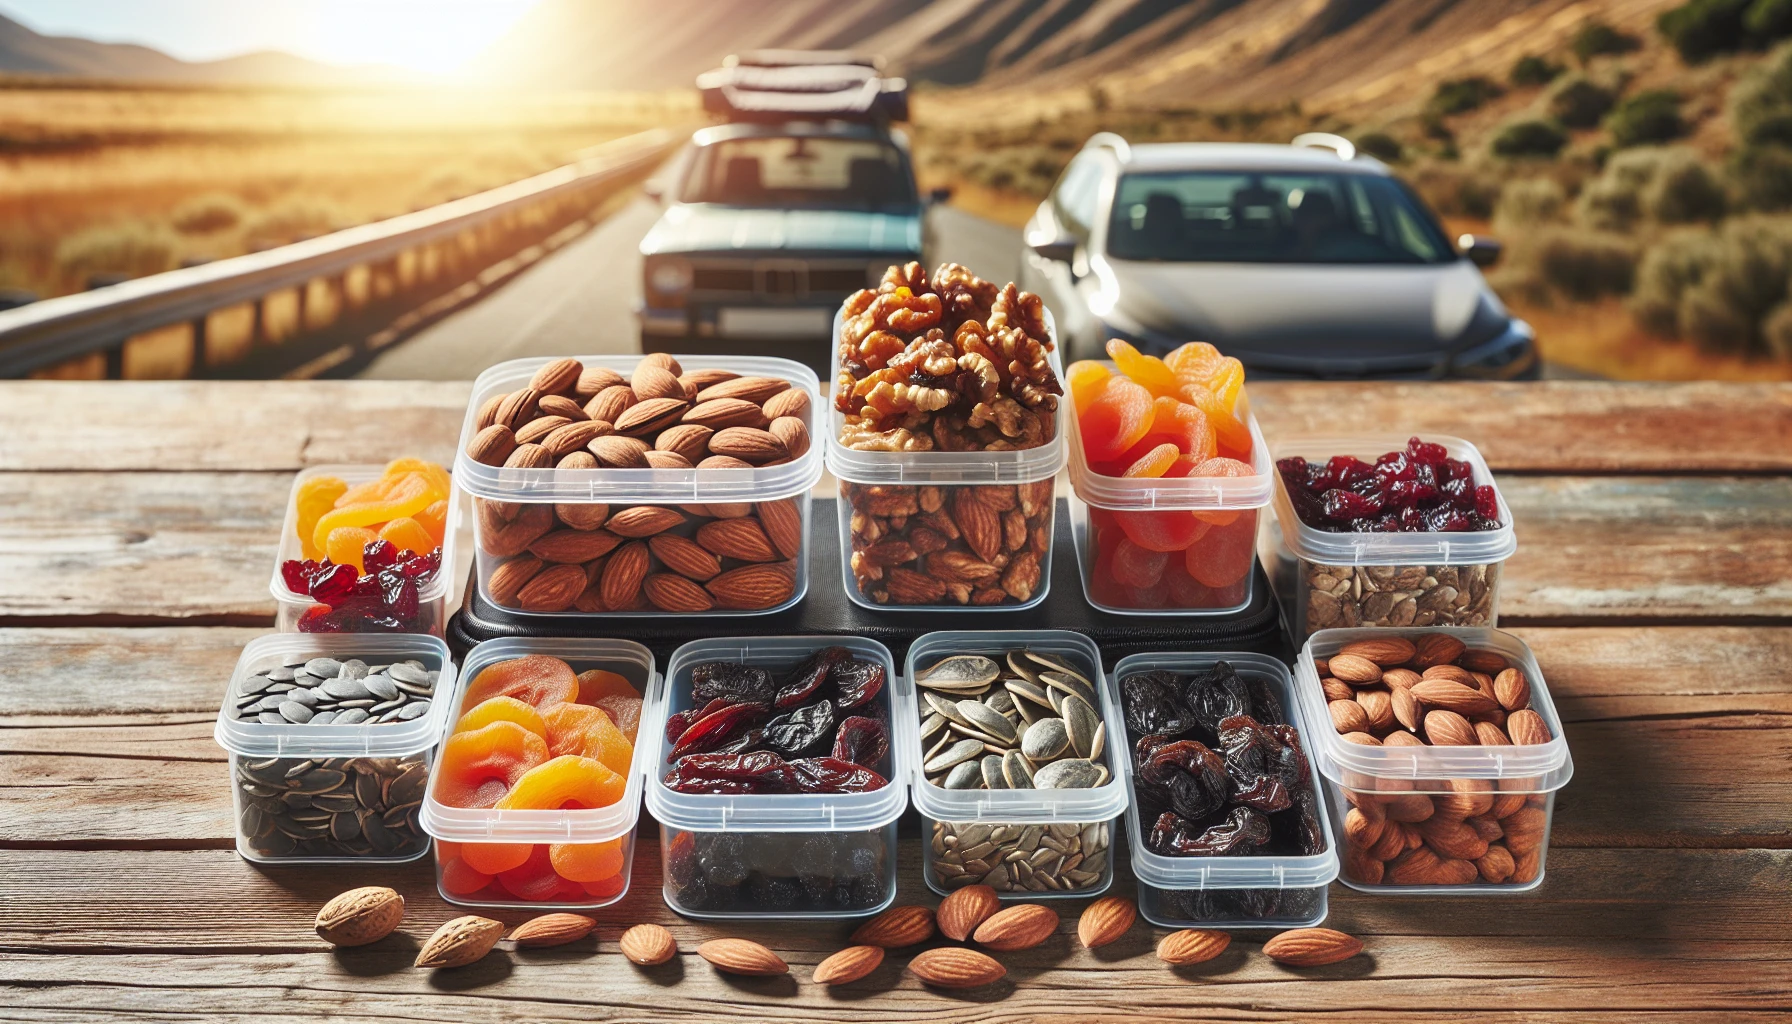 A variety of nutrient-dense snacks for travel